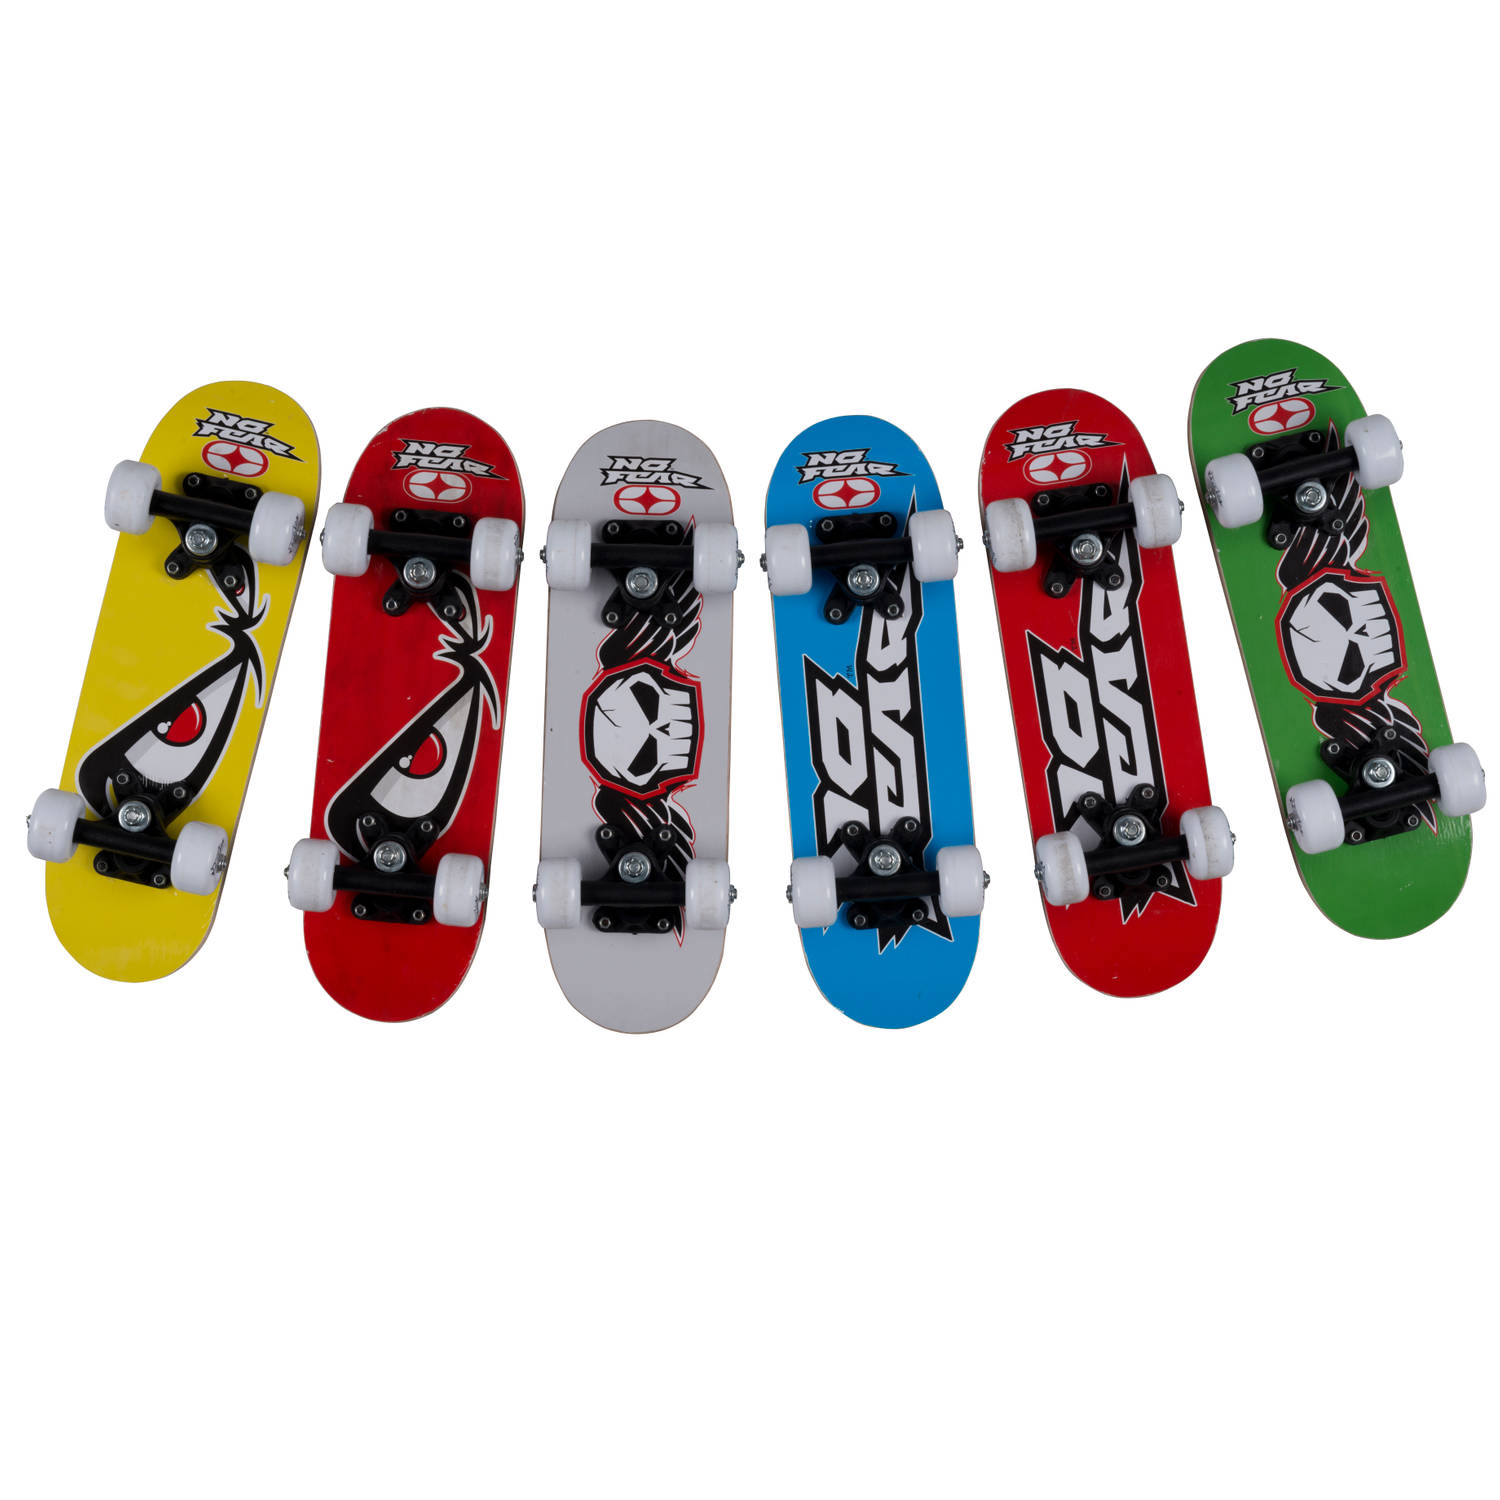 Voorzieningen knecht Ultieme No Fear Skateboard - 43,2 x 12,7 cm - Junior - Hout - 6 Varianten | Blokker